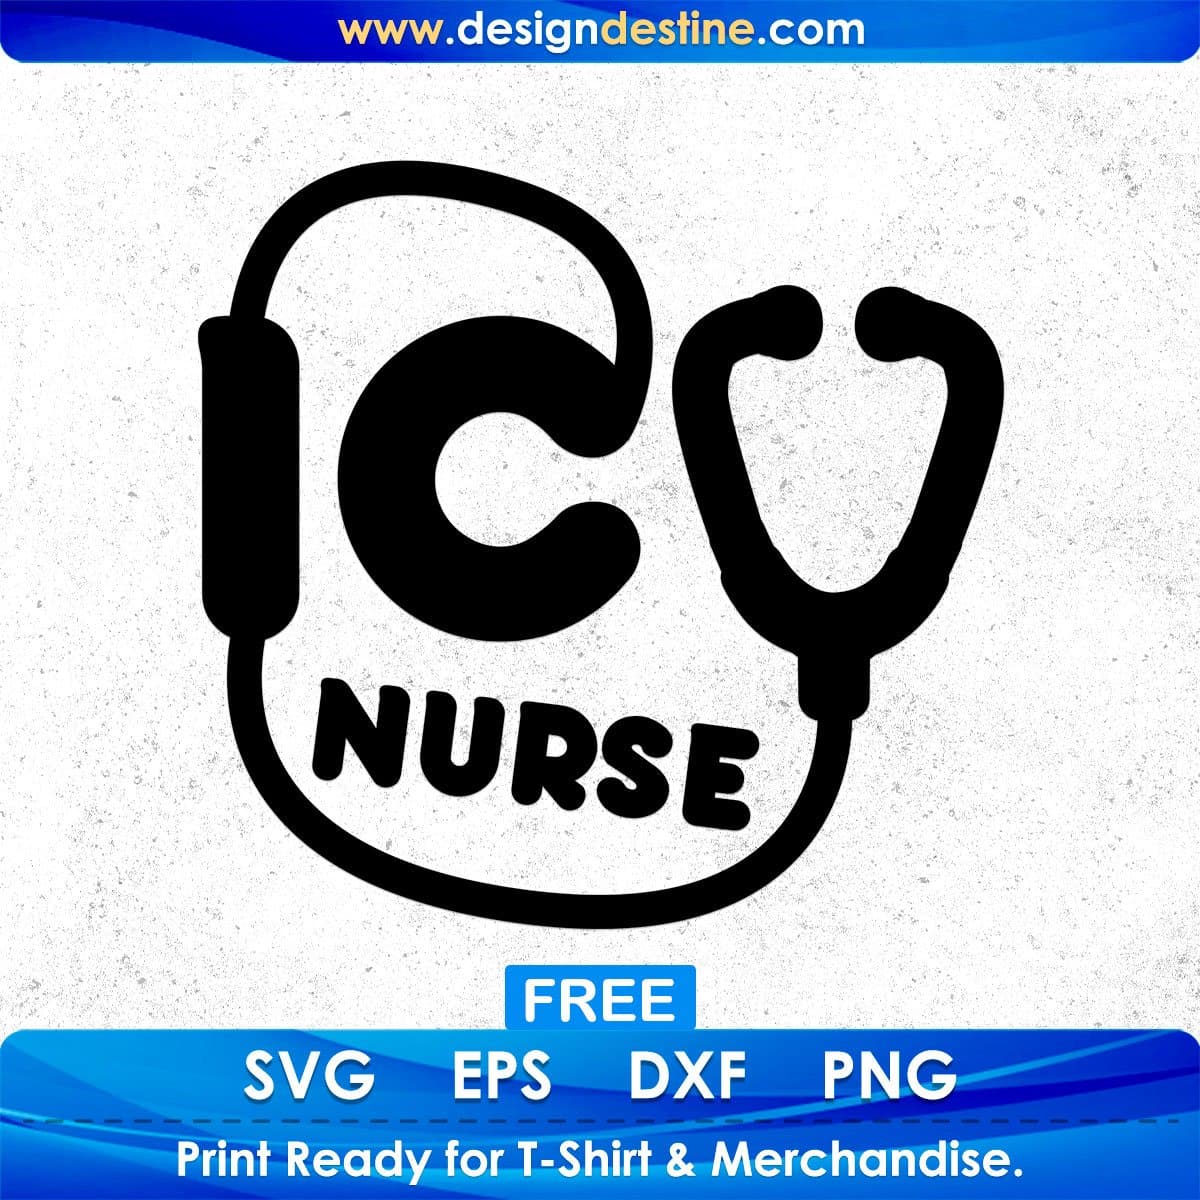 ICU Nurse T shirt Design In Svg Png Cutting Printable Files